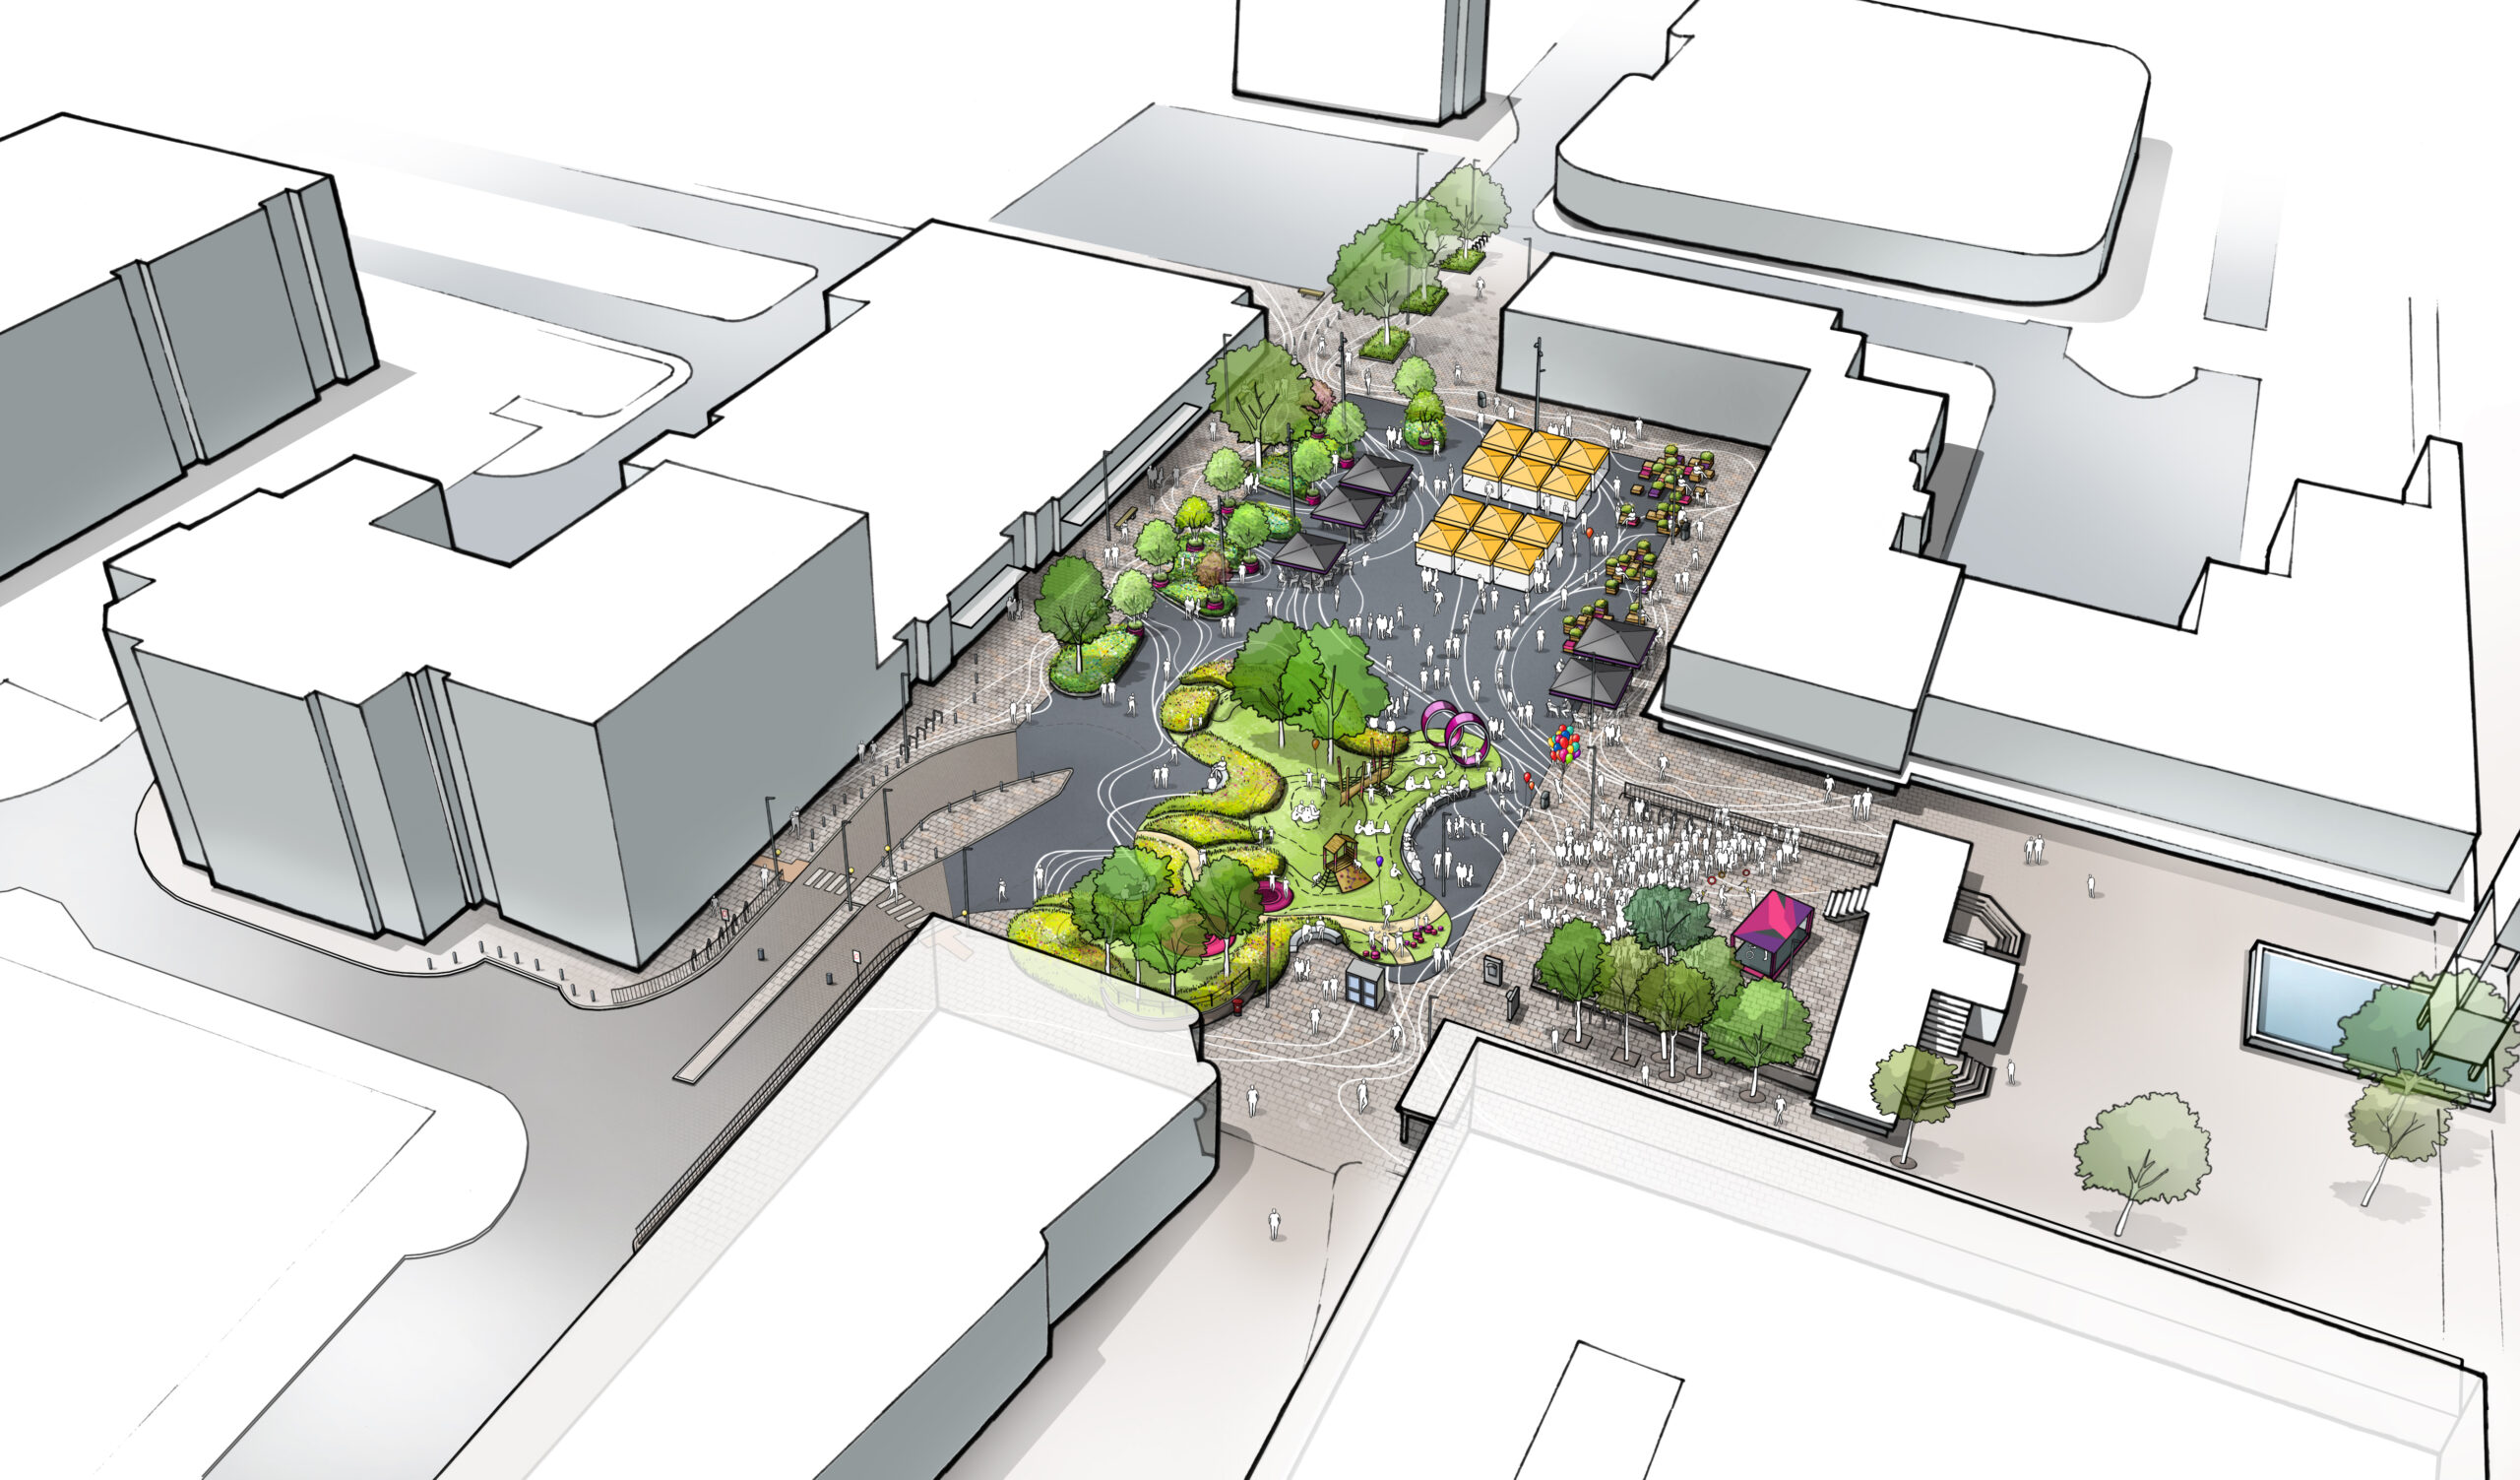 Community ideas to transform bus station on Danestrete revealed